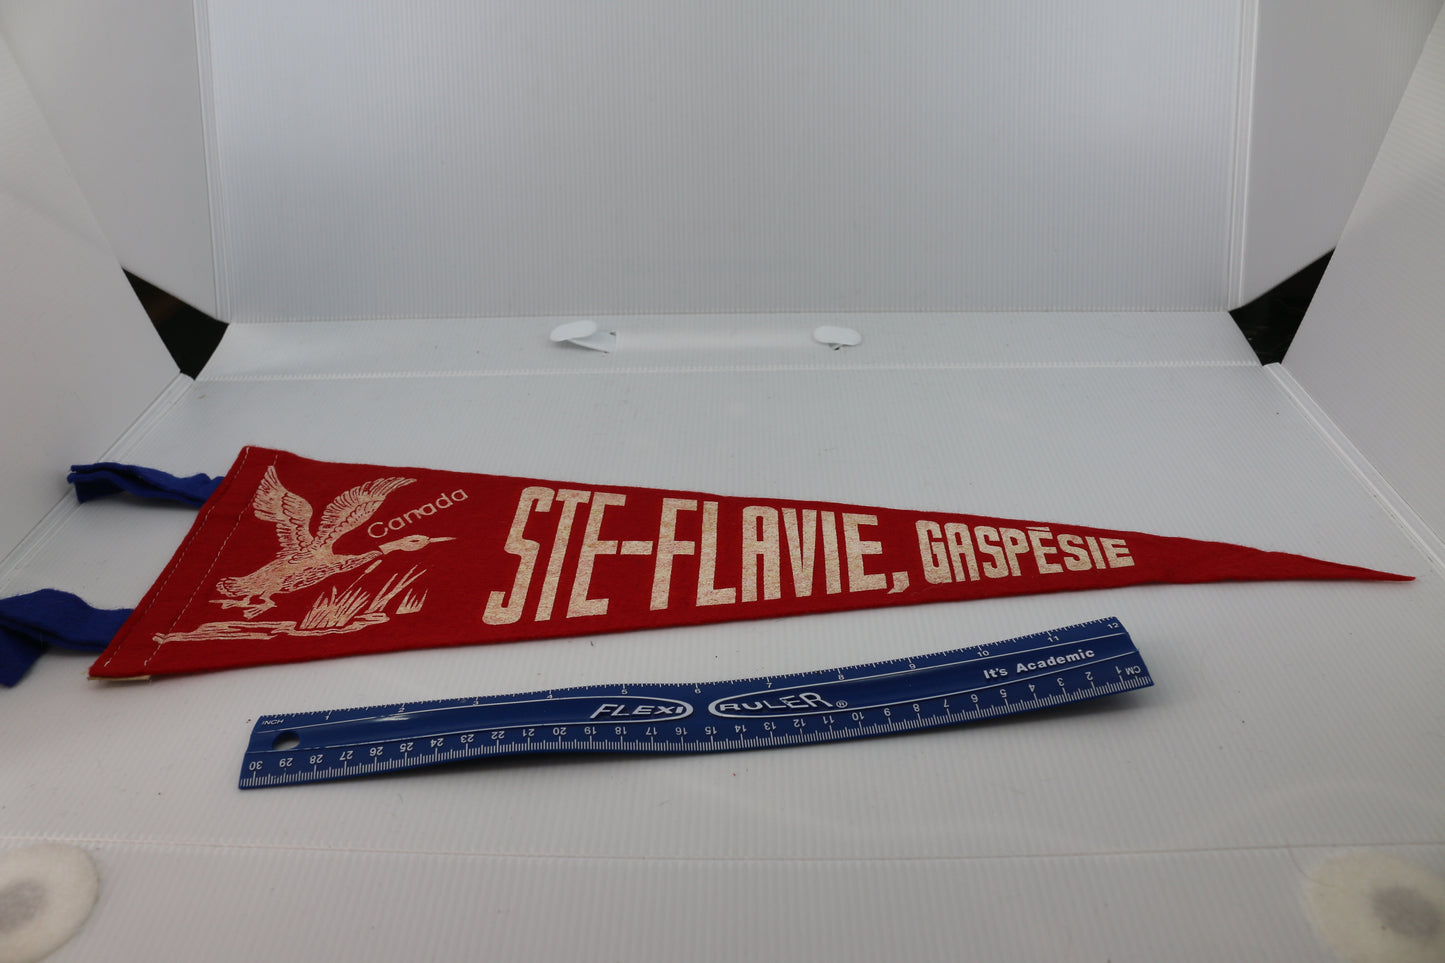 Vintage Souvenir Felt Pennant Canada St-Flavie, Gaspésie Duck Red